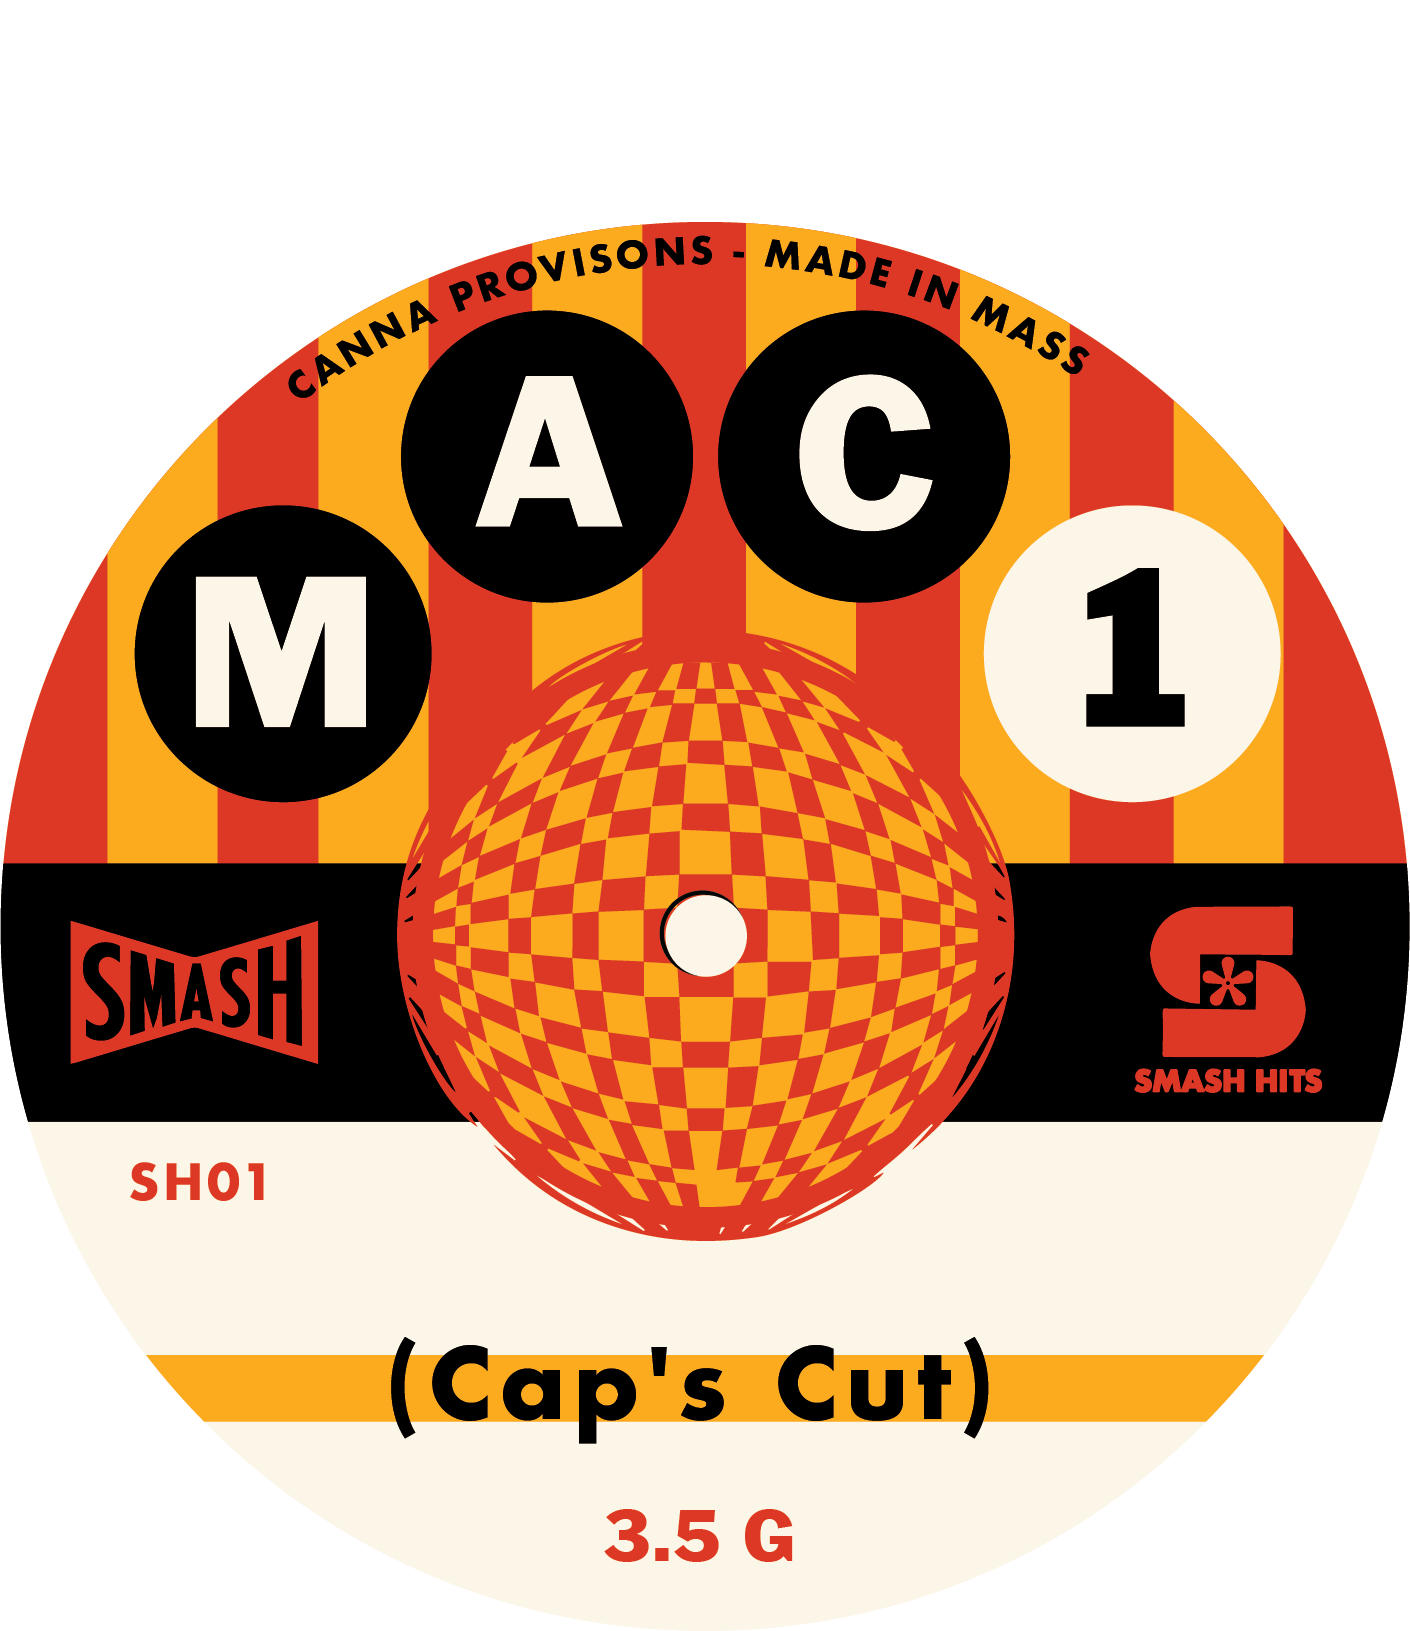 MAC 1 CAP's smash hits chemdog canna provisions